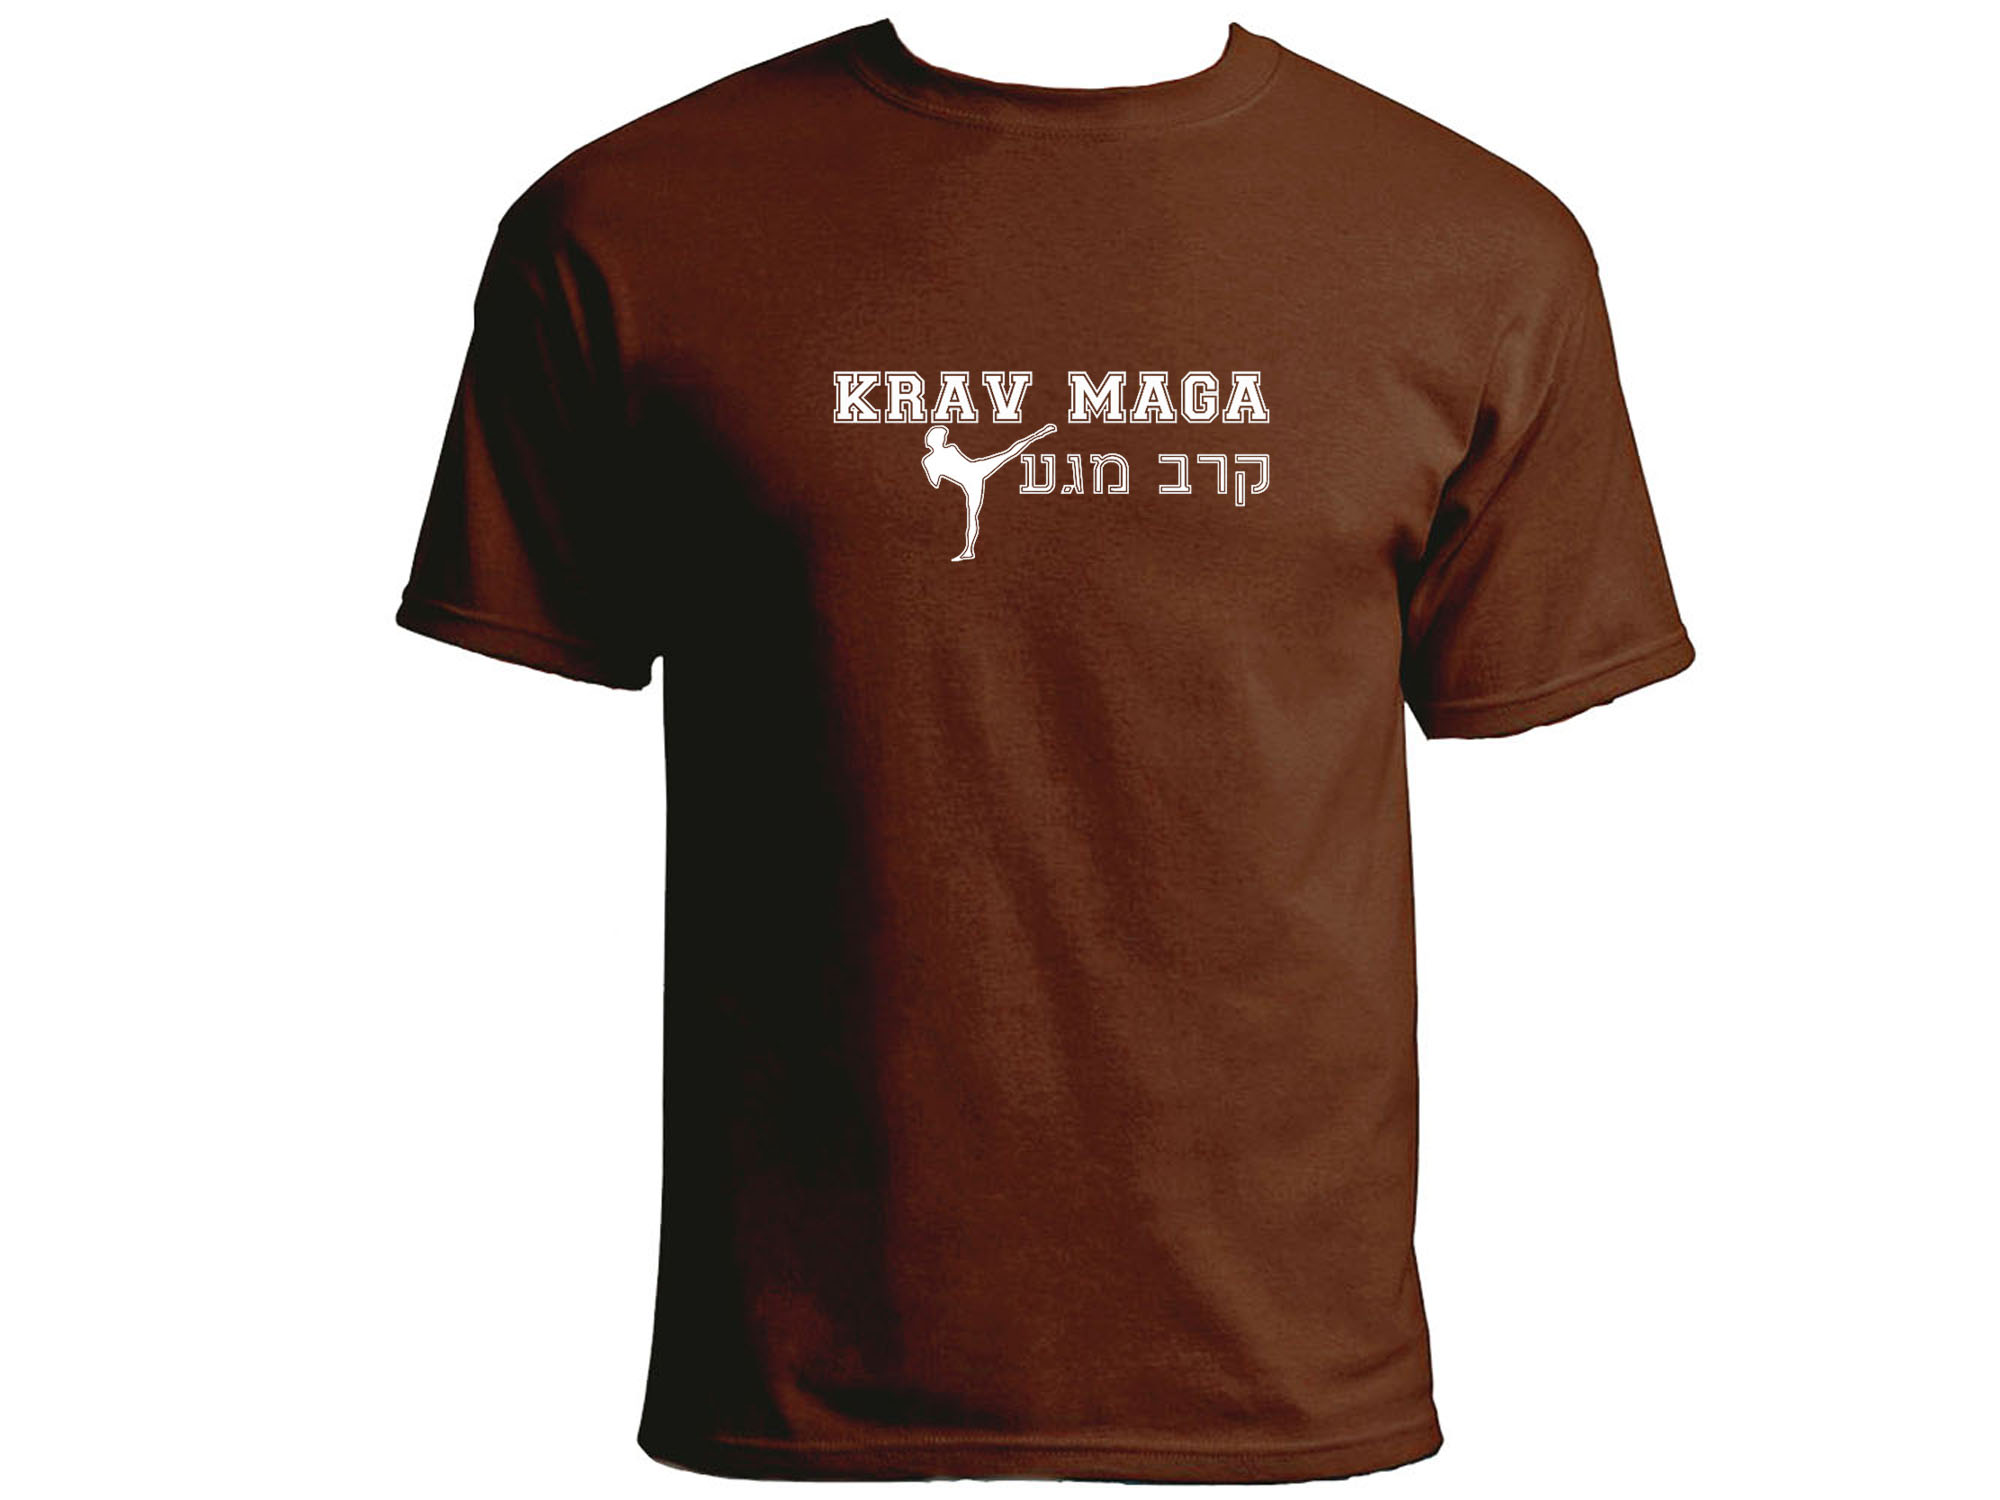 Krav Maga 100% cotton brown tee shirt